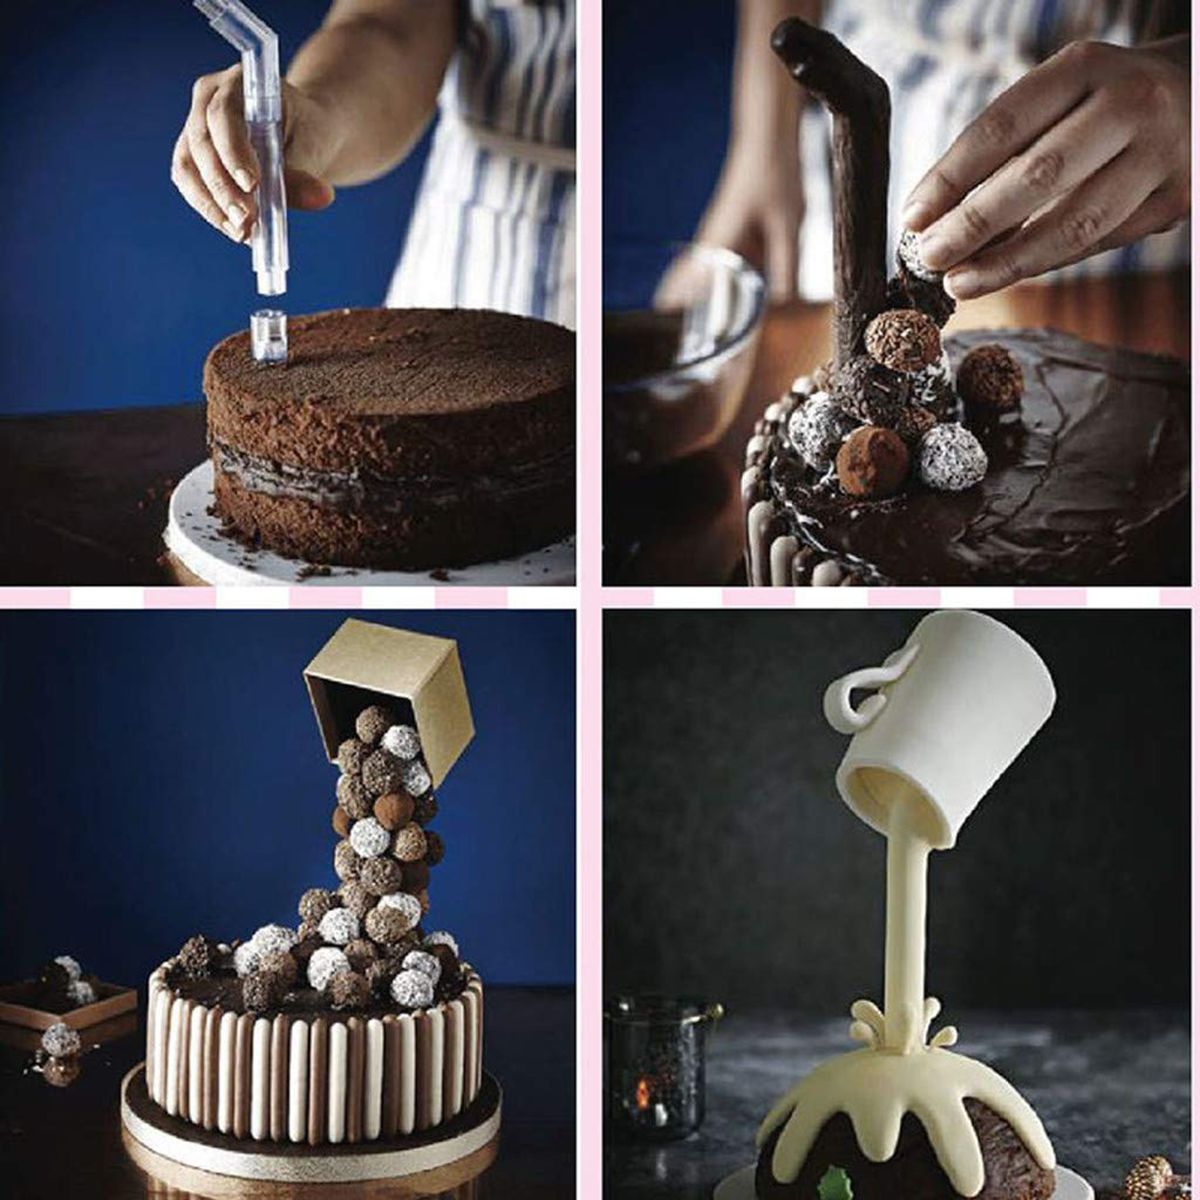 Anti-Gravity-Pouring-Cake-Frame-Kit-Fondant-Decorations-Sugar-Craft-Making-Stand-1496370